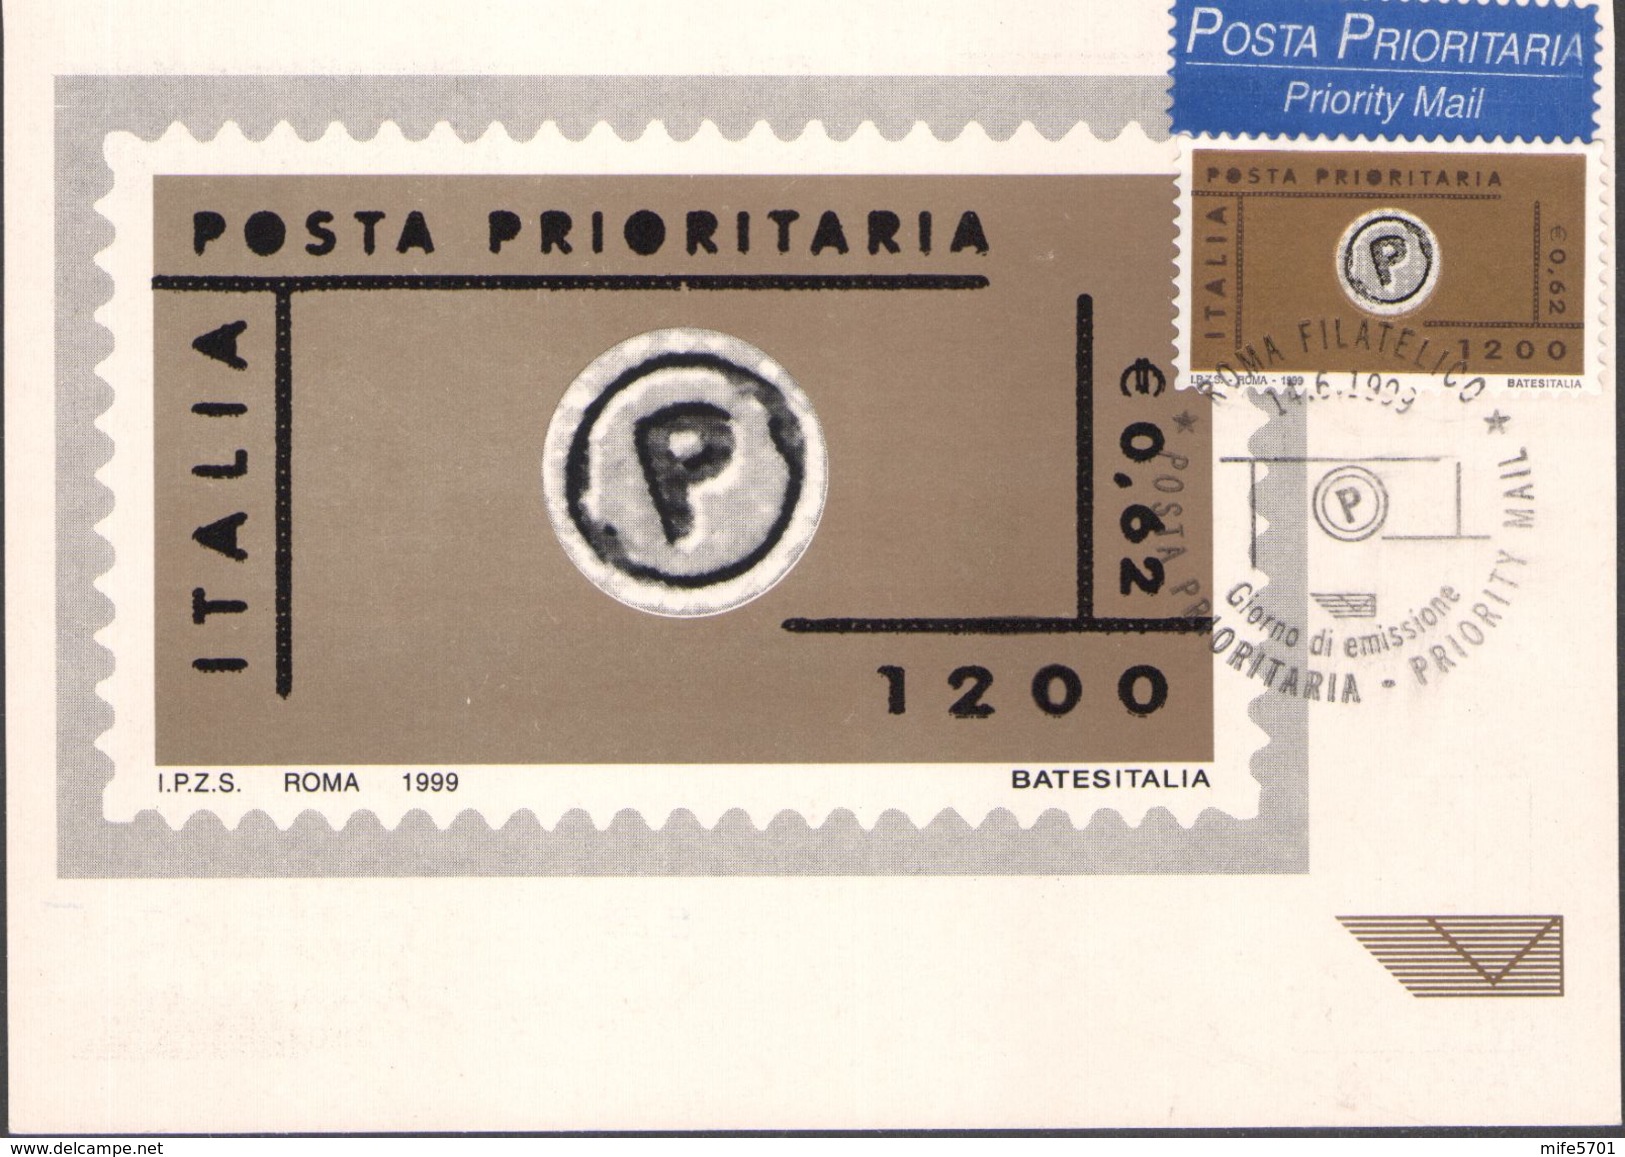 MAXCARD - CARTOLINA POSTA PRIORITARIA FRANCOBOLLO DA L. 1200 EURO 0,62 - 14.6.1999 - CATALOGO SASSONE: 2419 - FDC - Cartes-Maximum (CM)